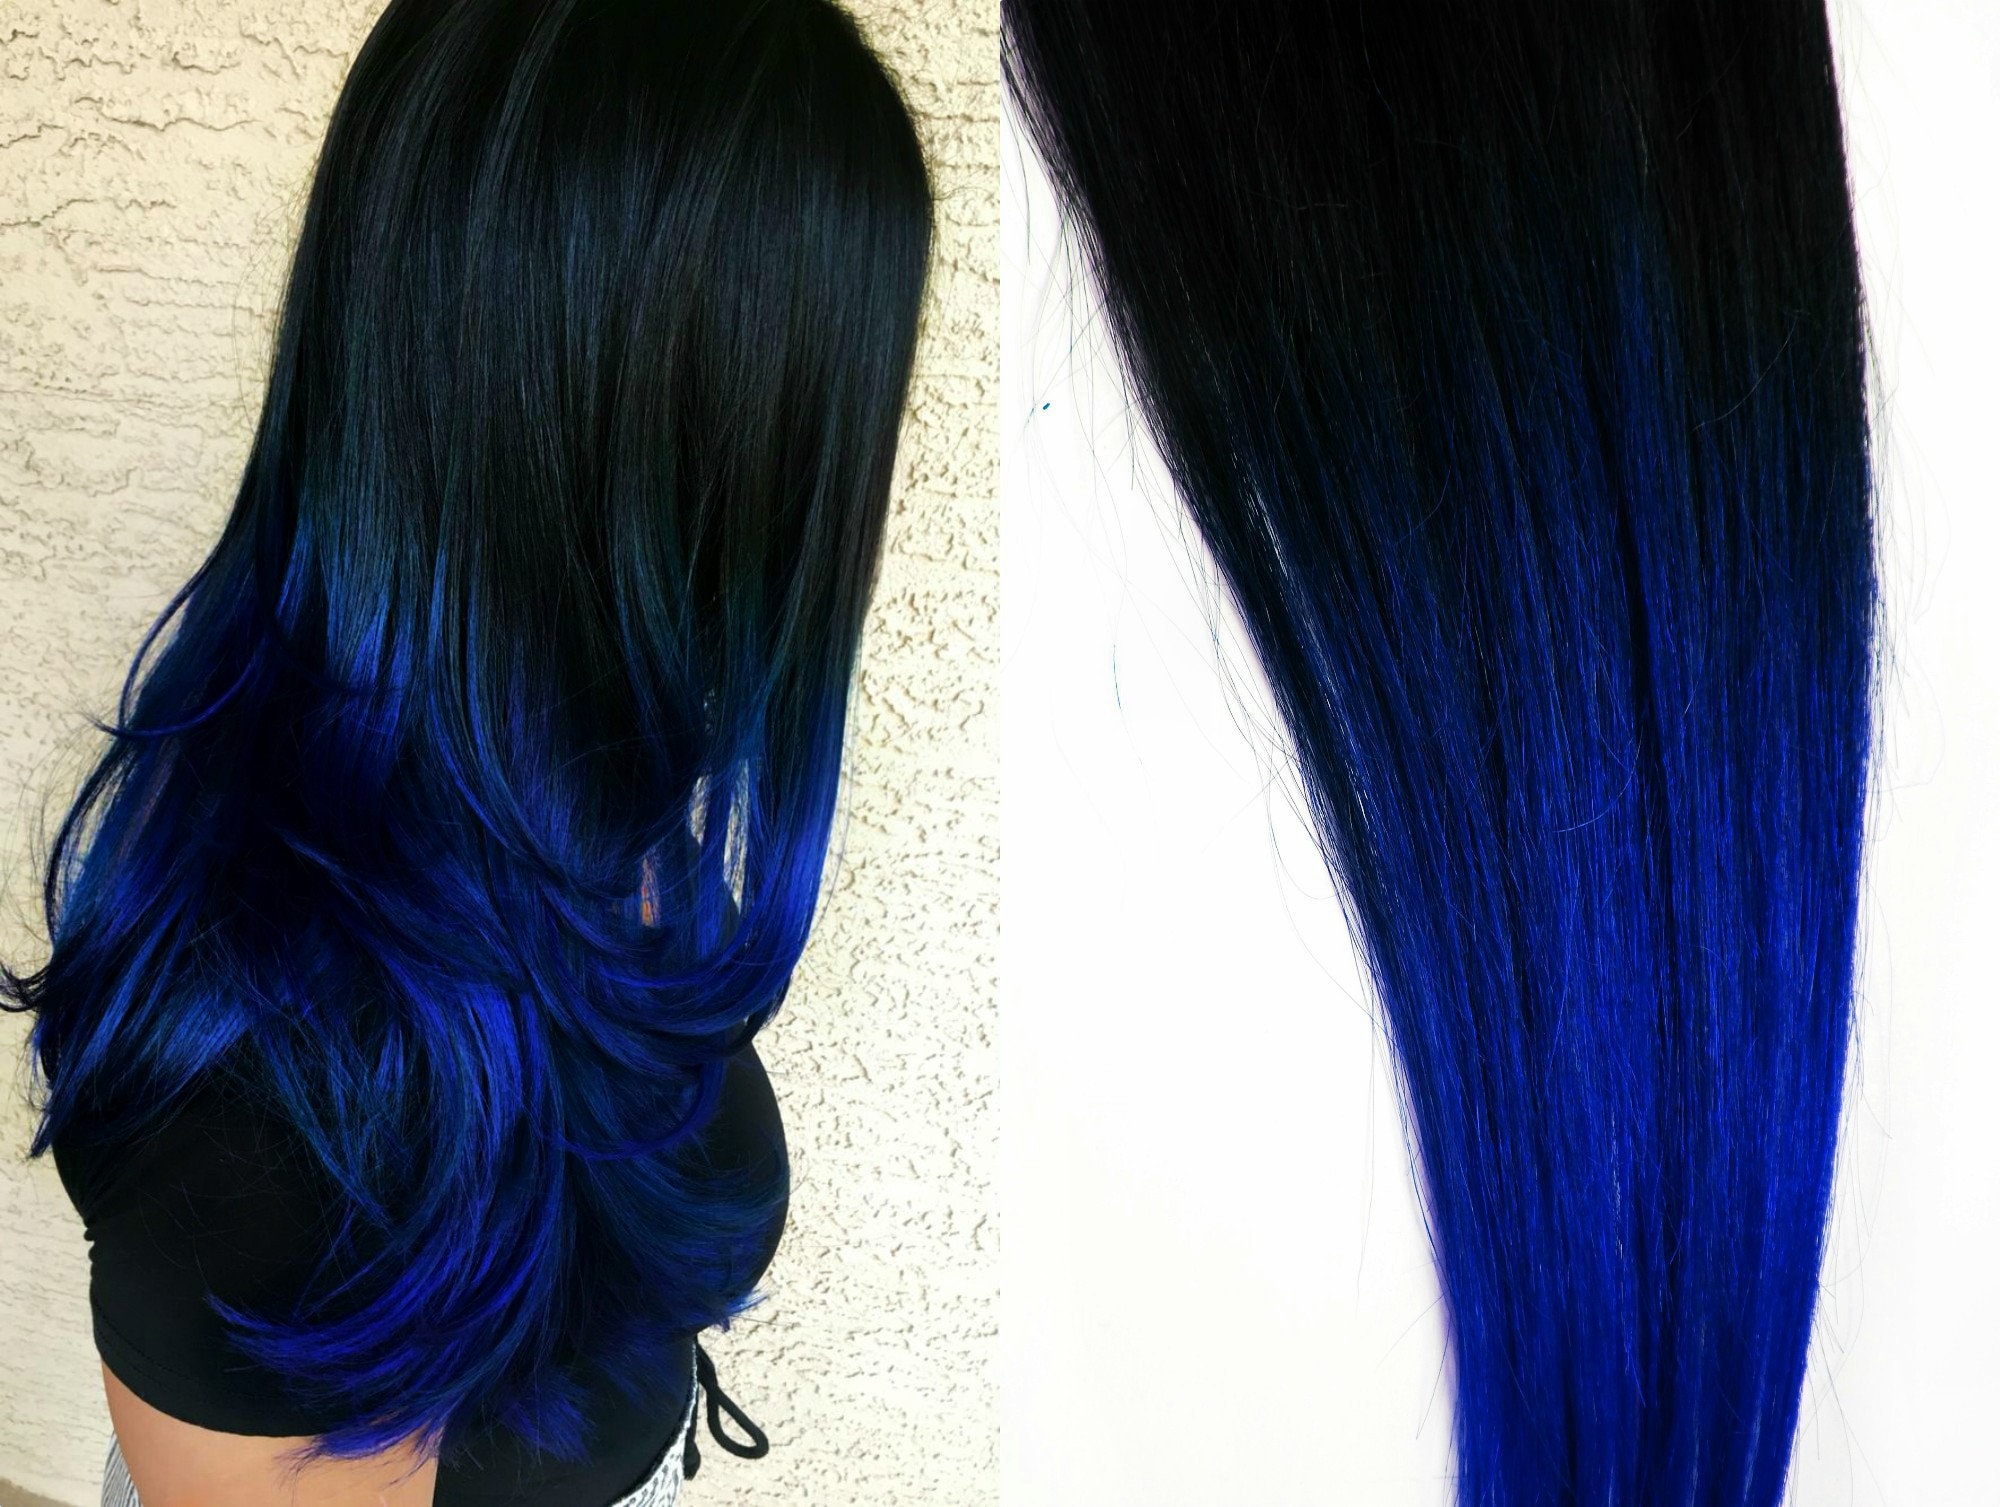 5. Dark blue hair extensions - wide 6